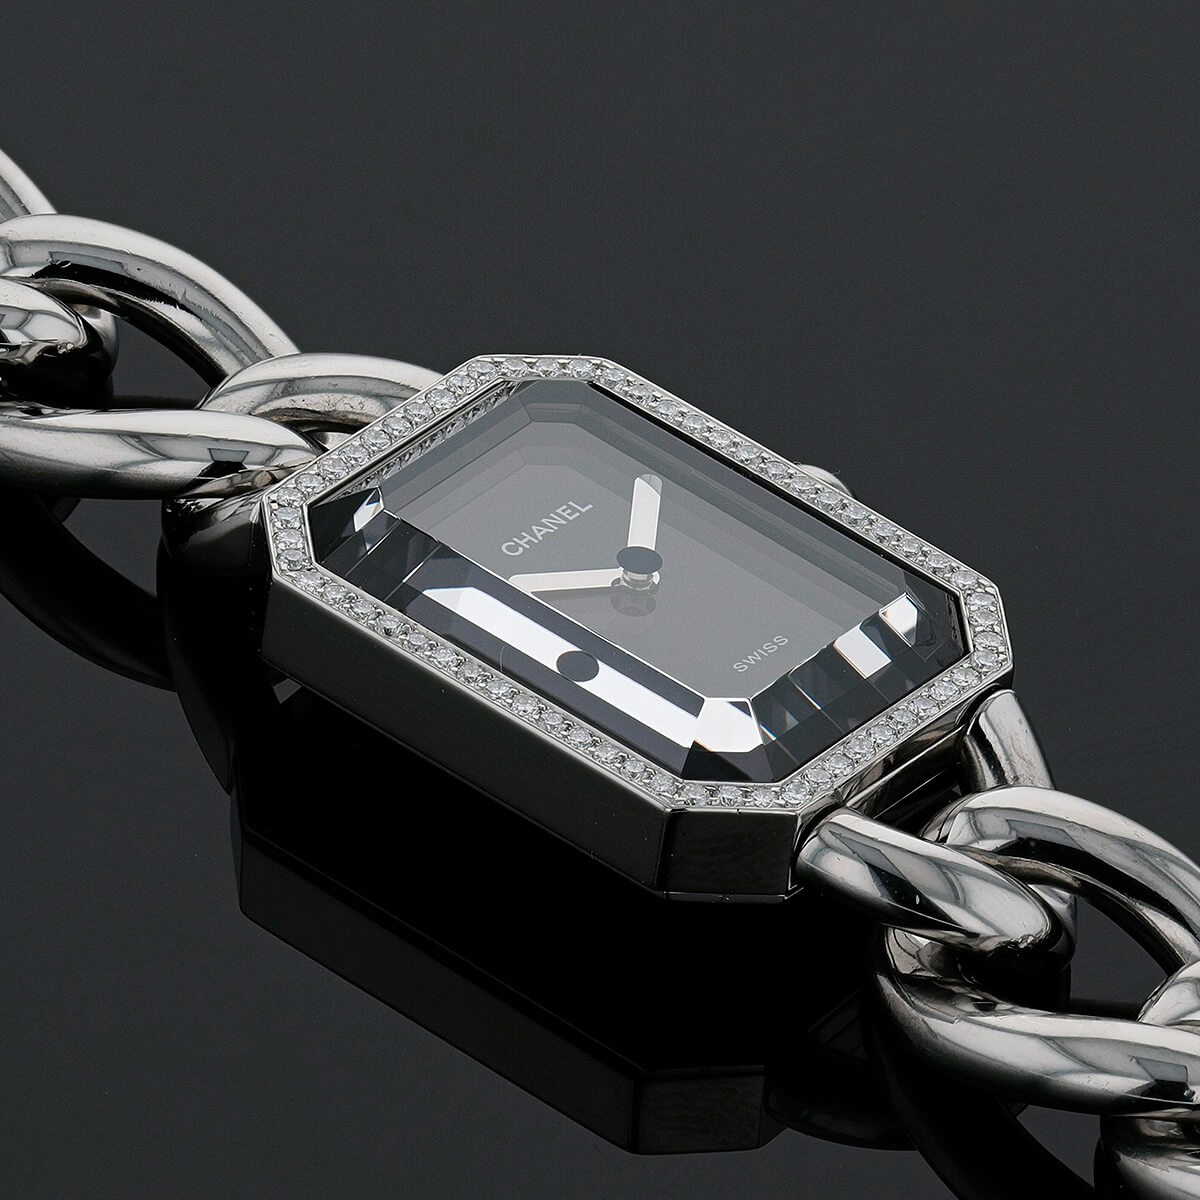 Chanel Première Chaîne diamonds and stainless steel watch